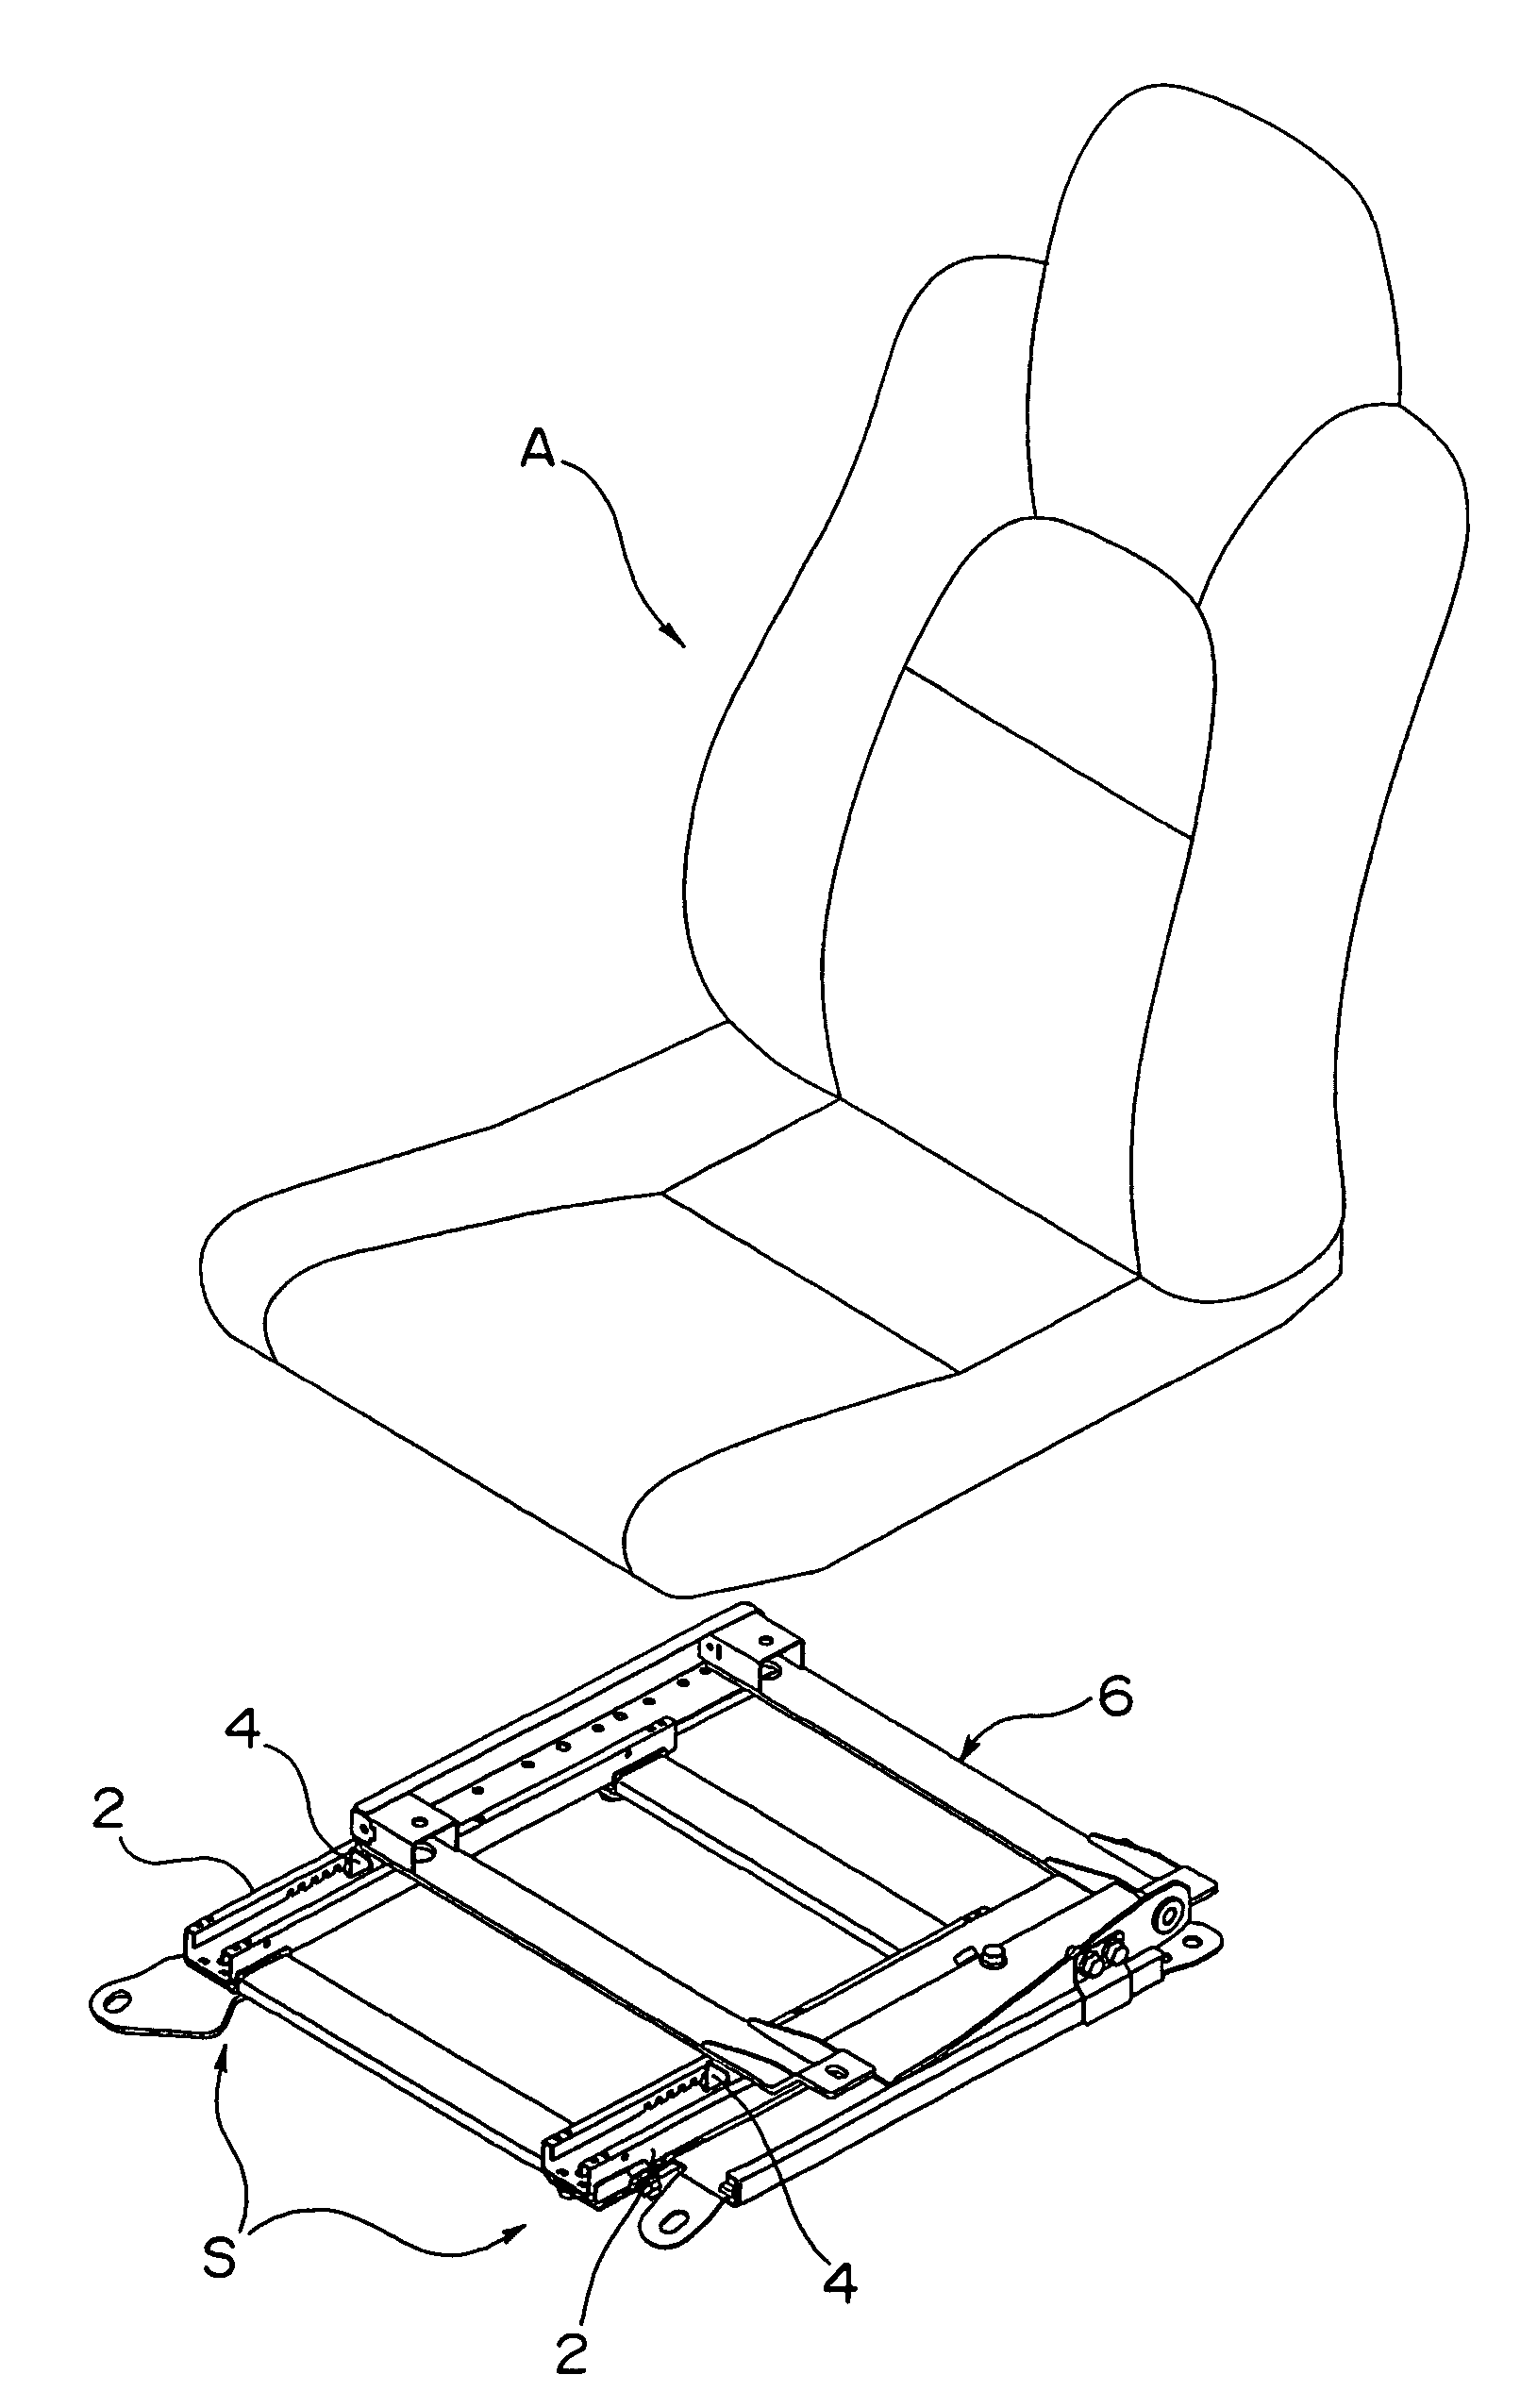 Slide adjuster for an automobile seat